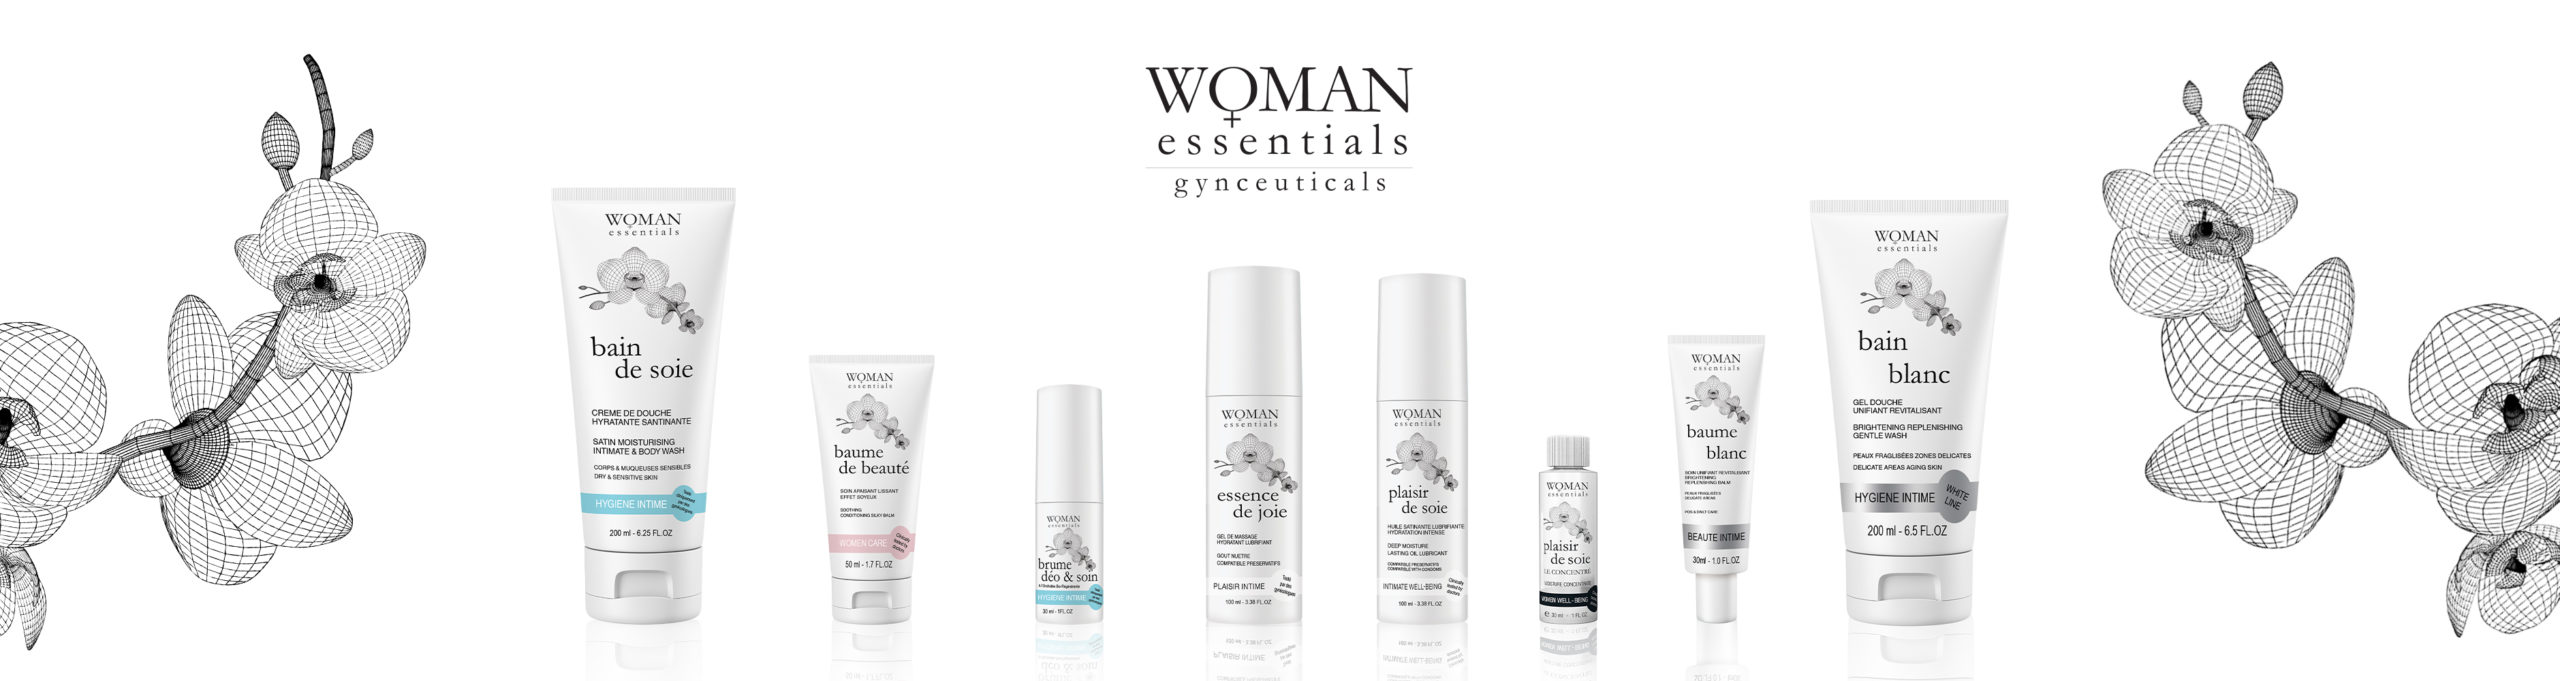 baume blanc - Woman Essentials